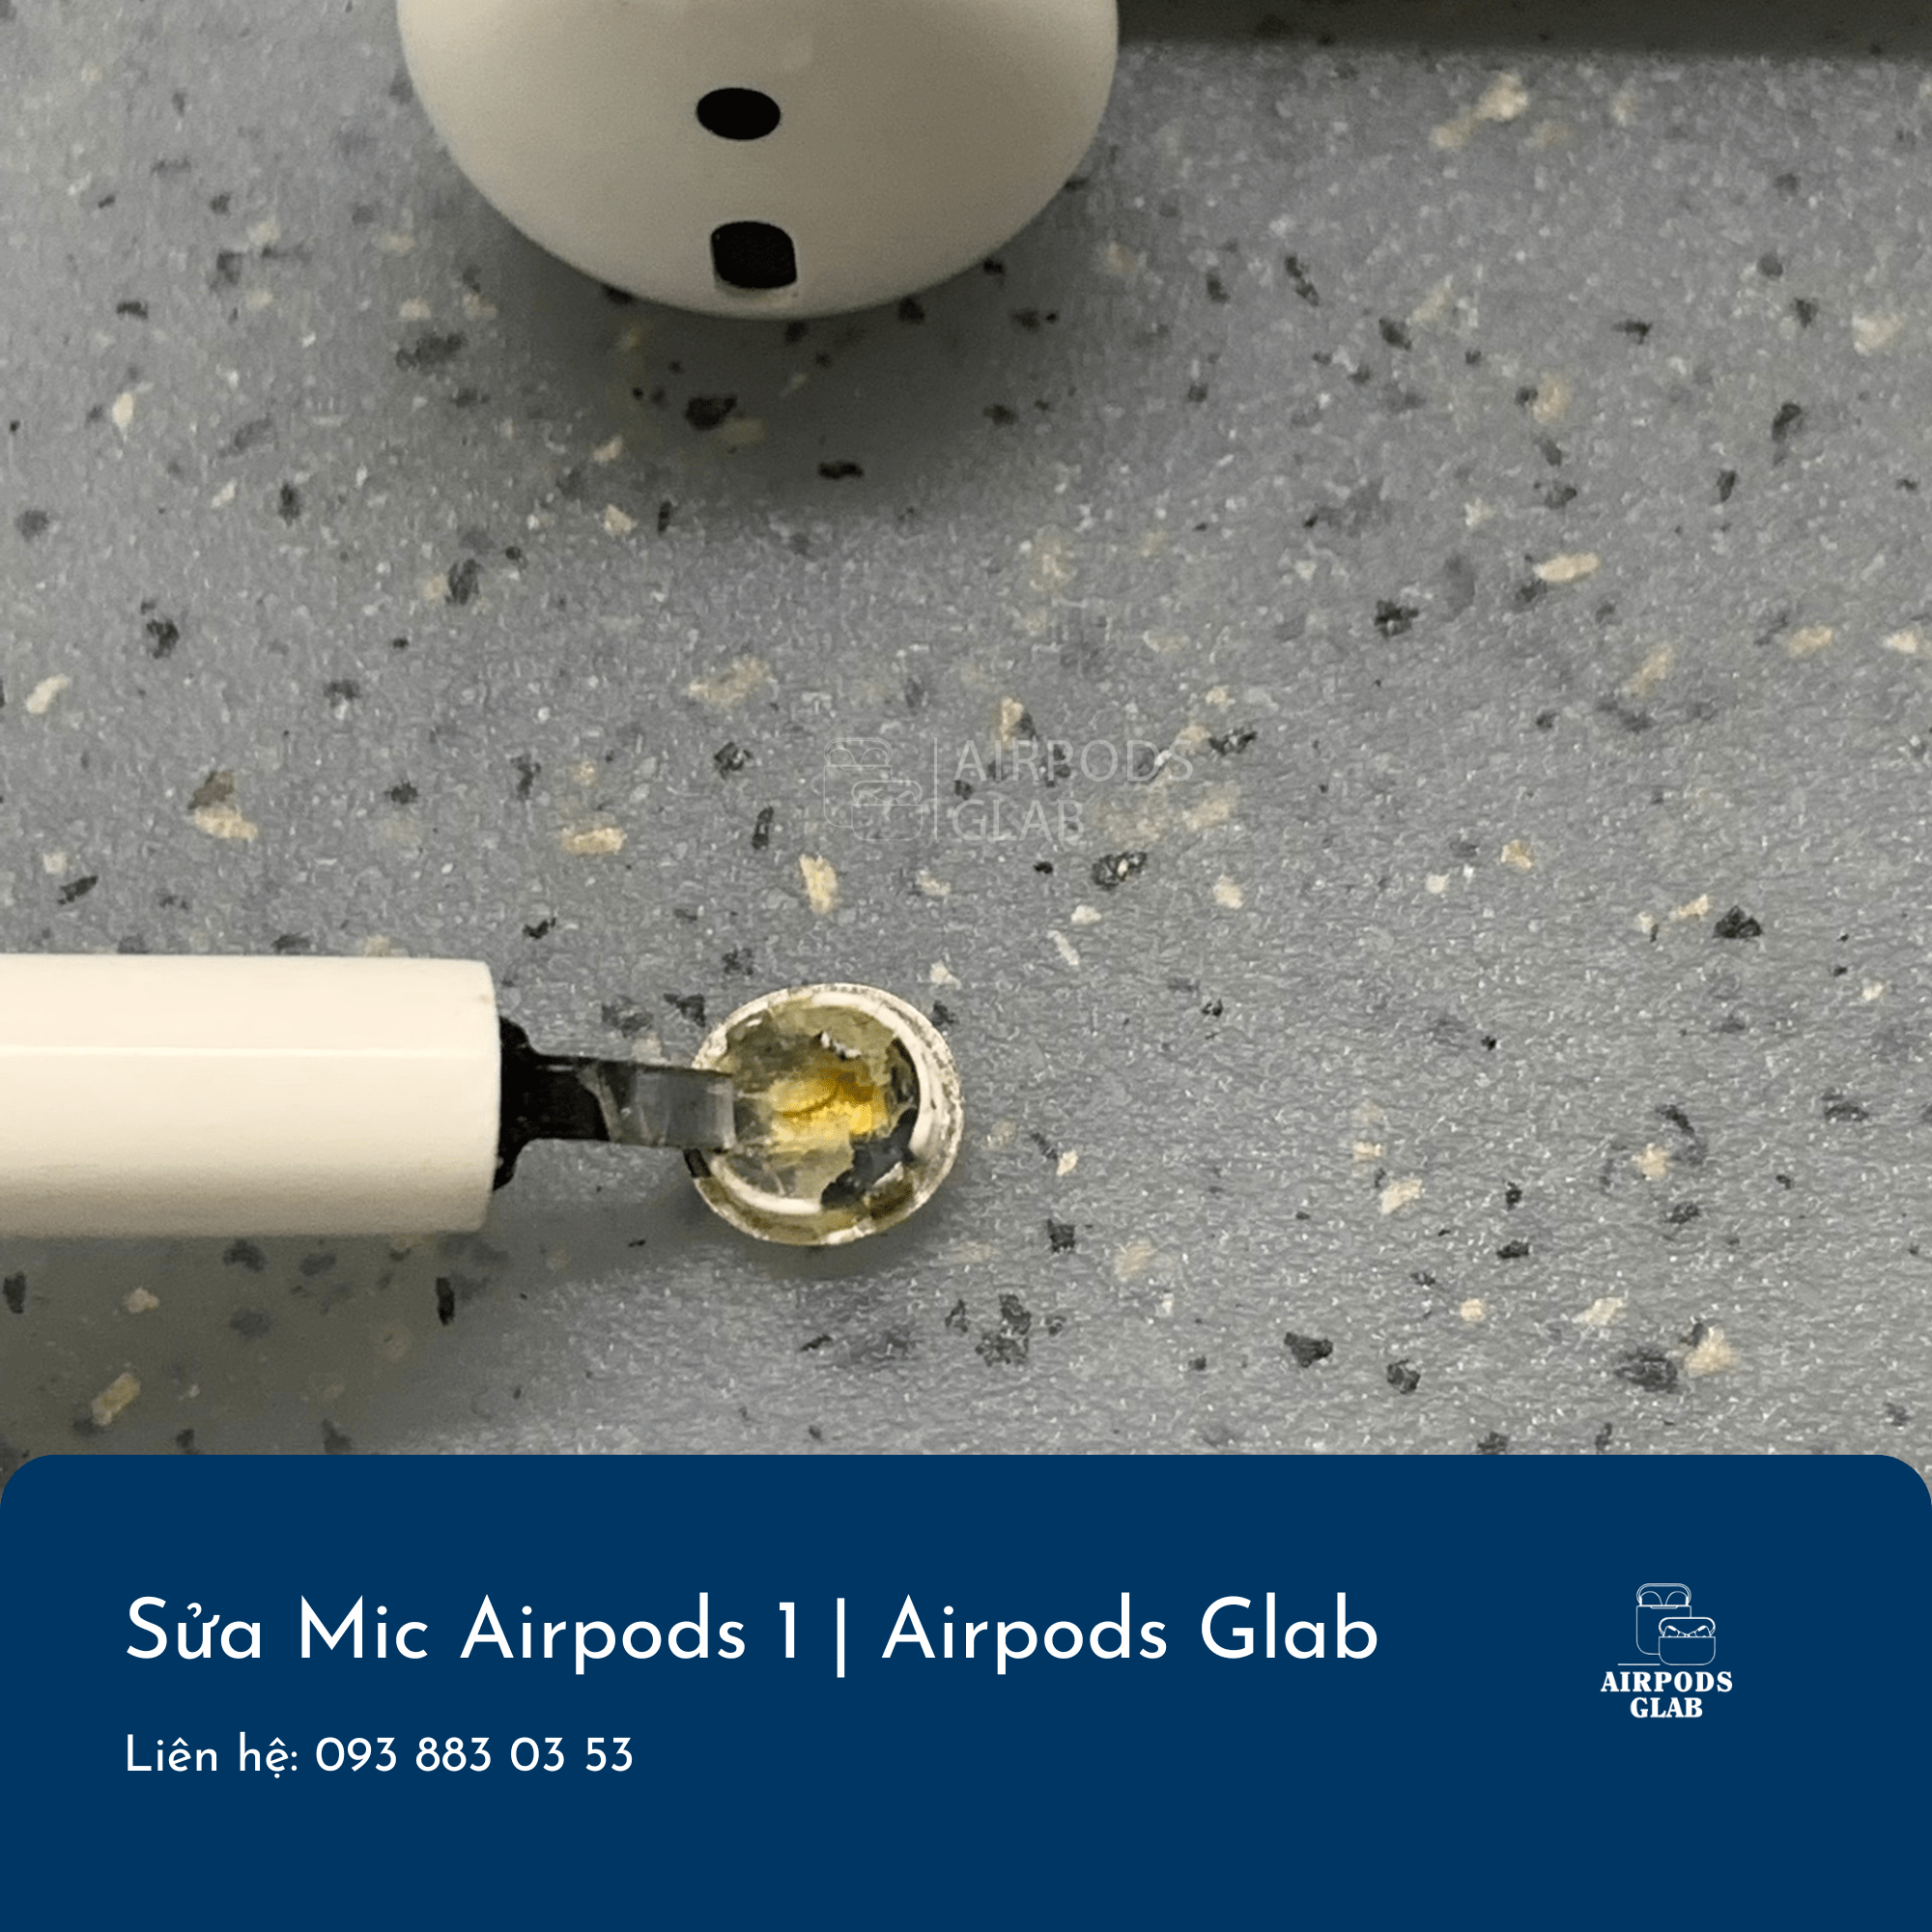 sua-mic-airpods-1